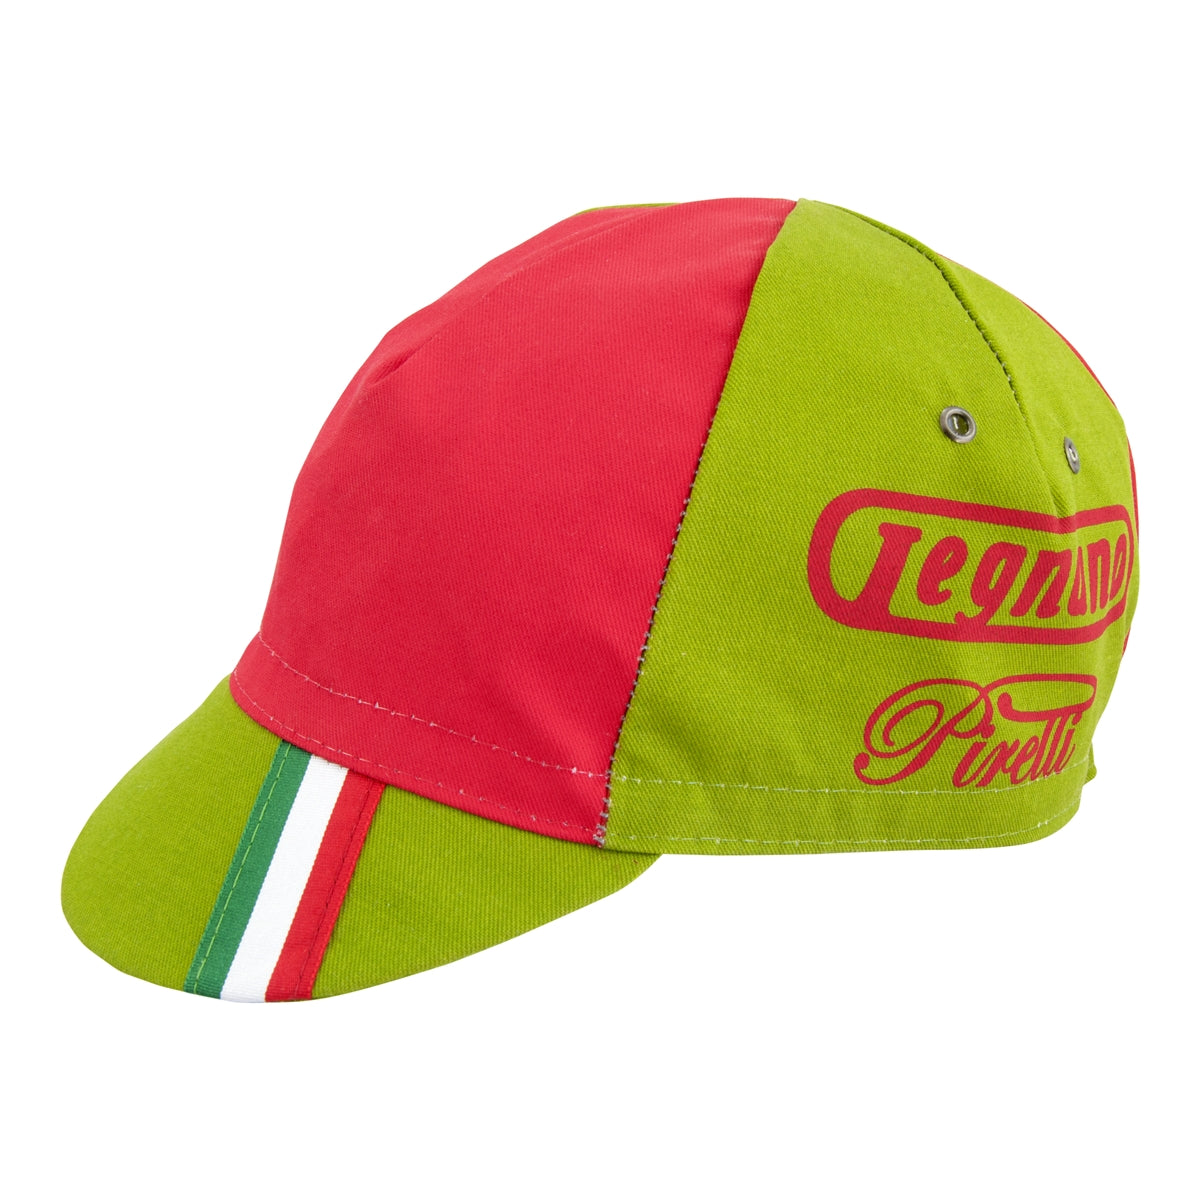 Apis Legnano Pirelli Vintage Cycling Cap